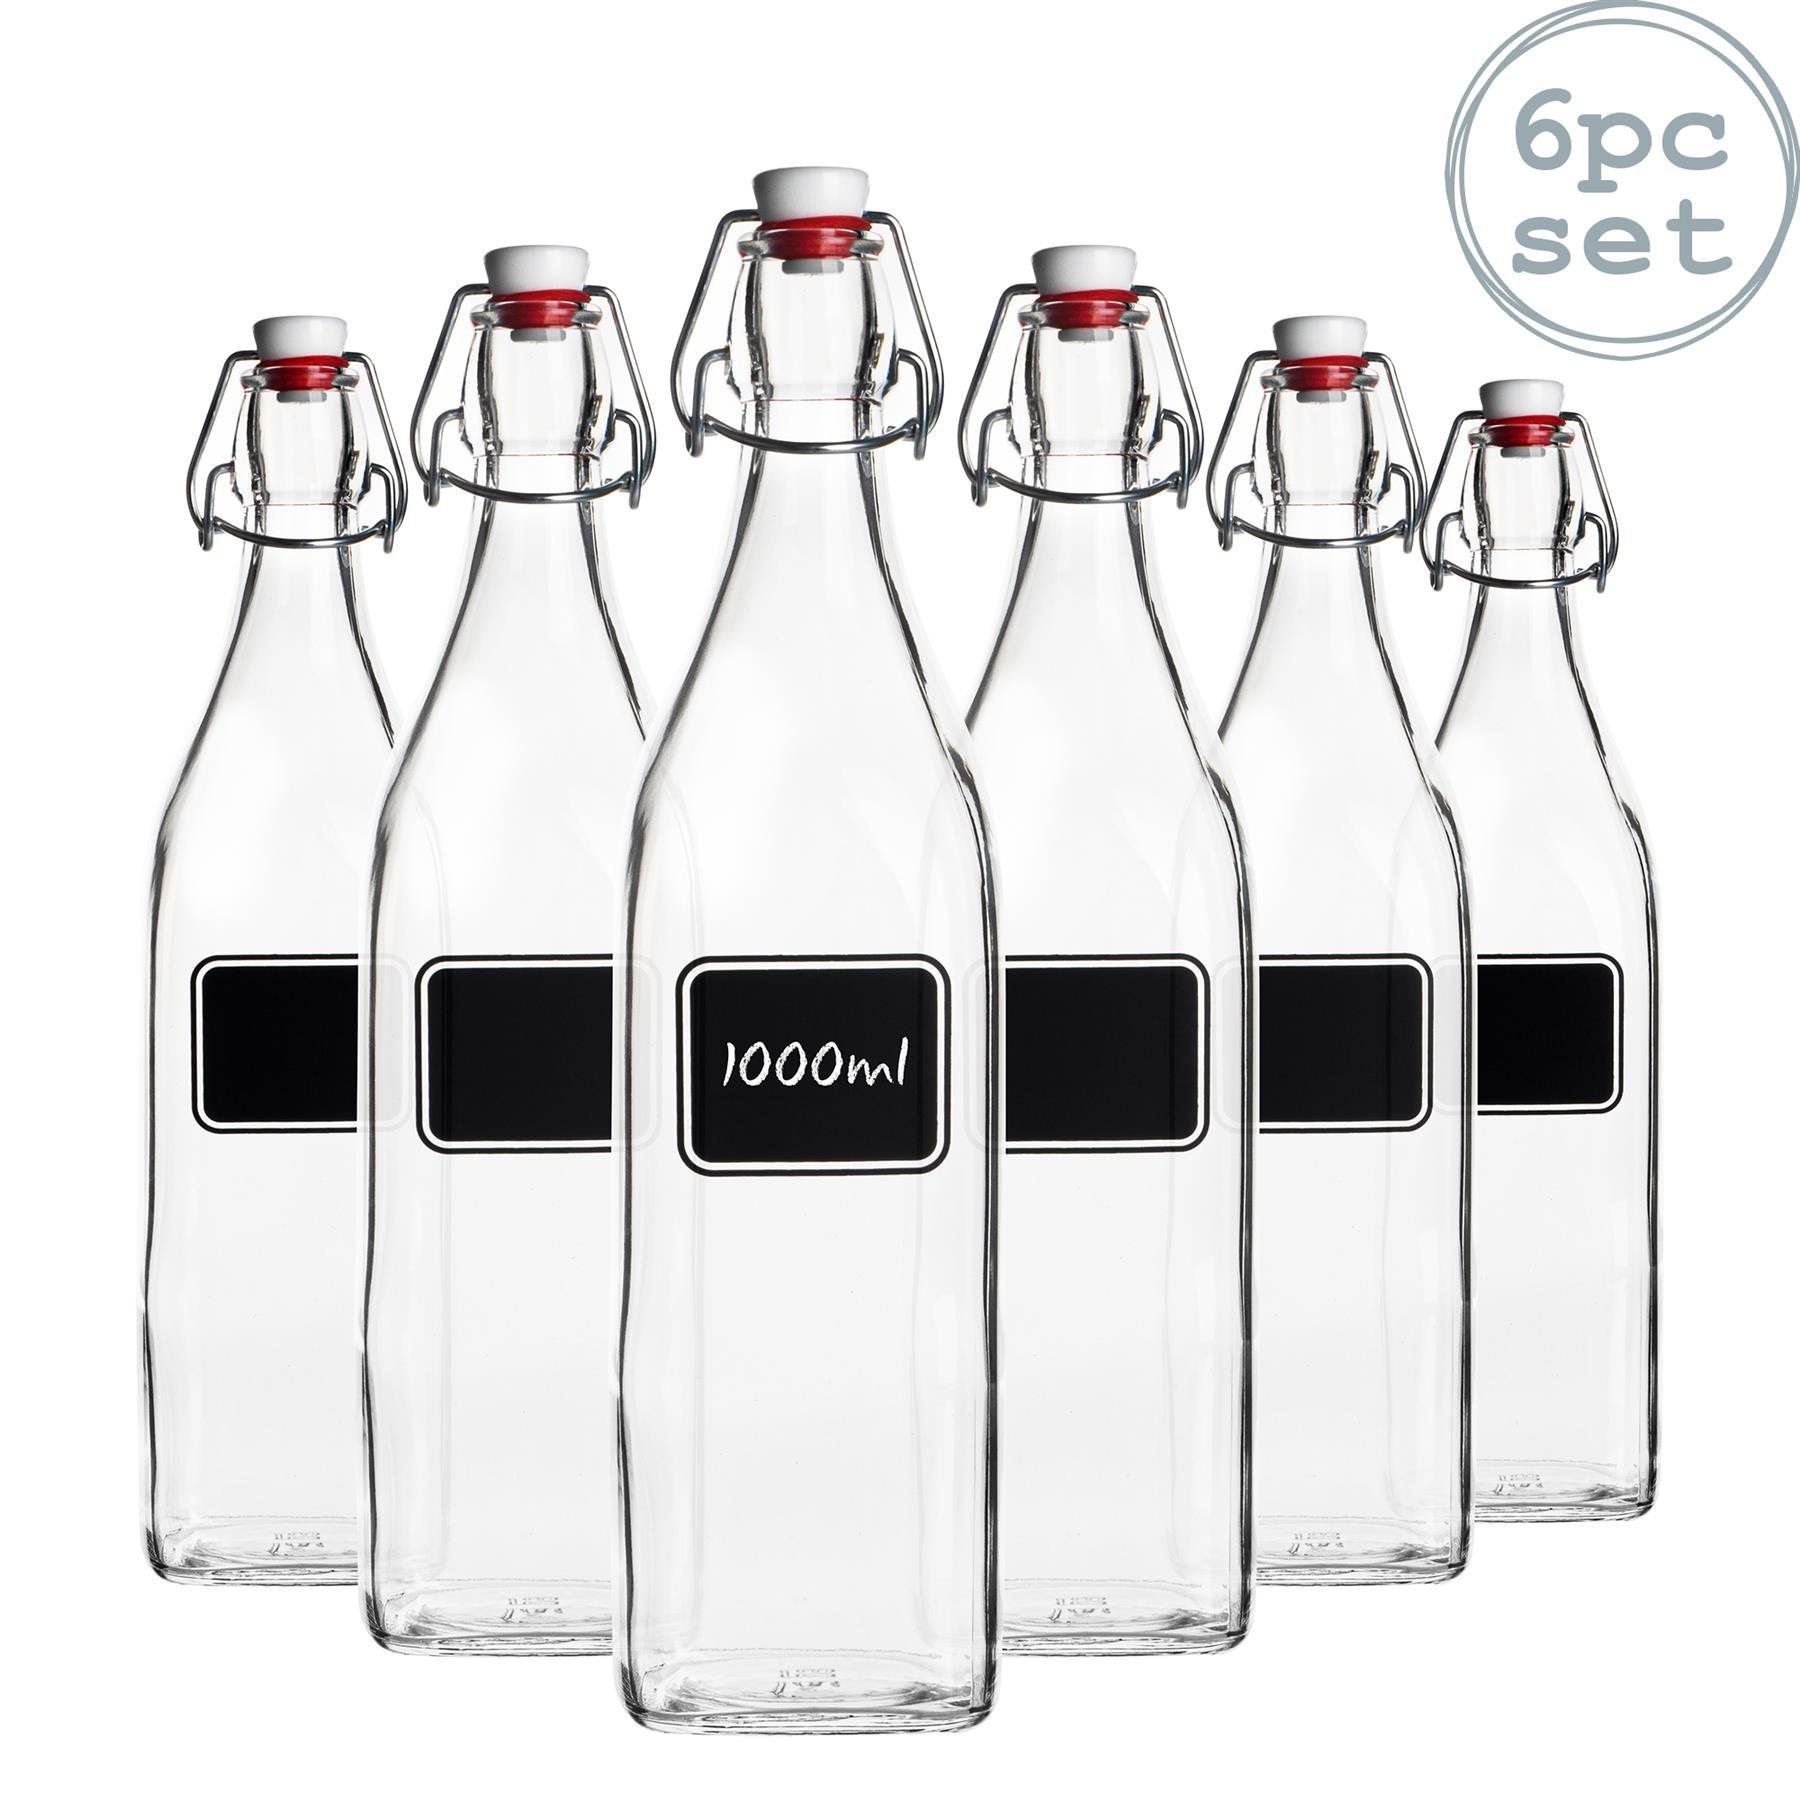 Lavagna Decorative Bottles with Chalkboard Label 